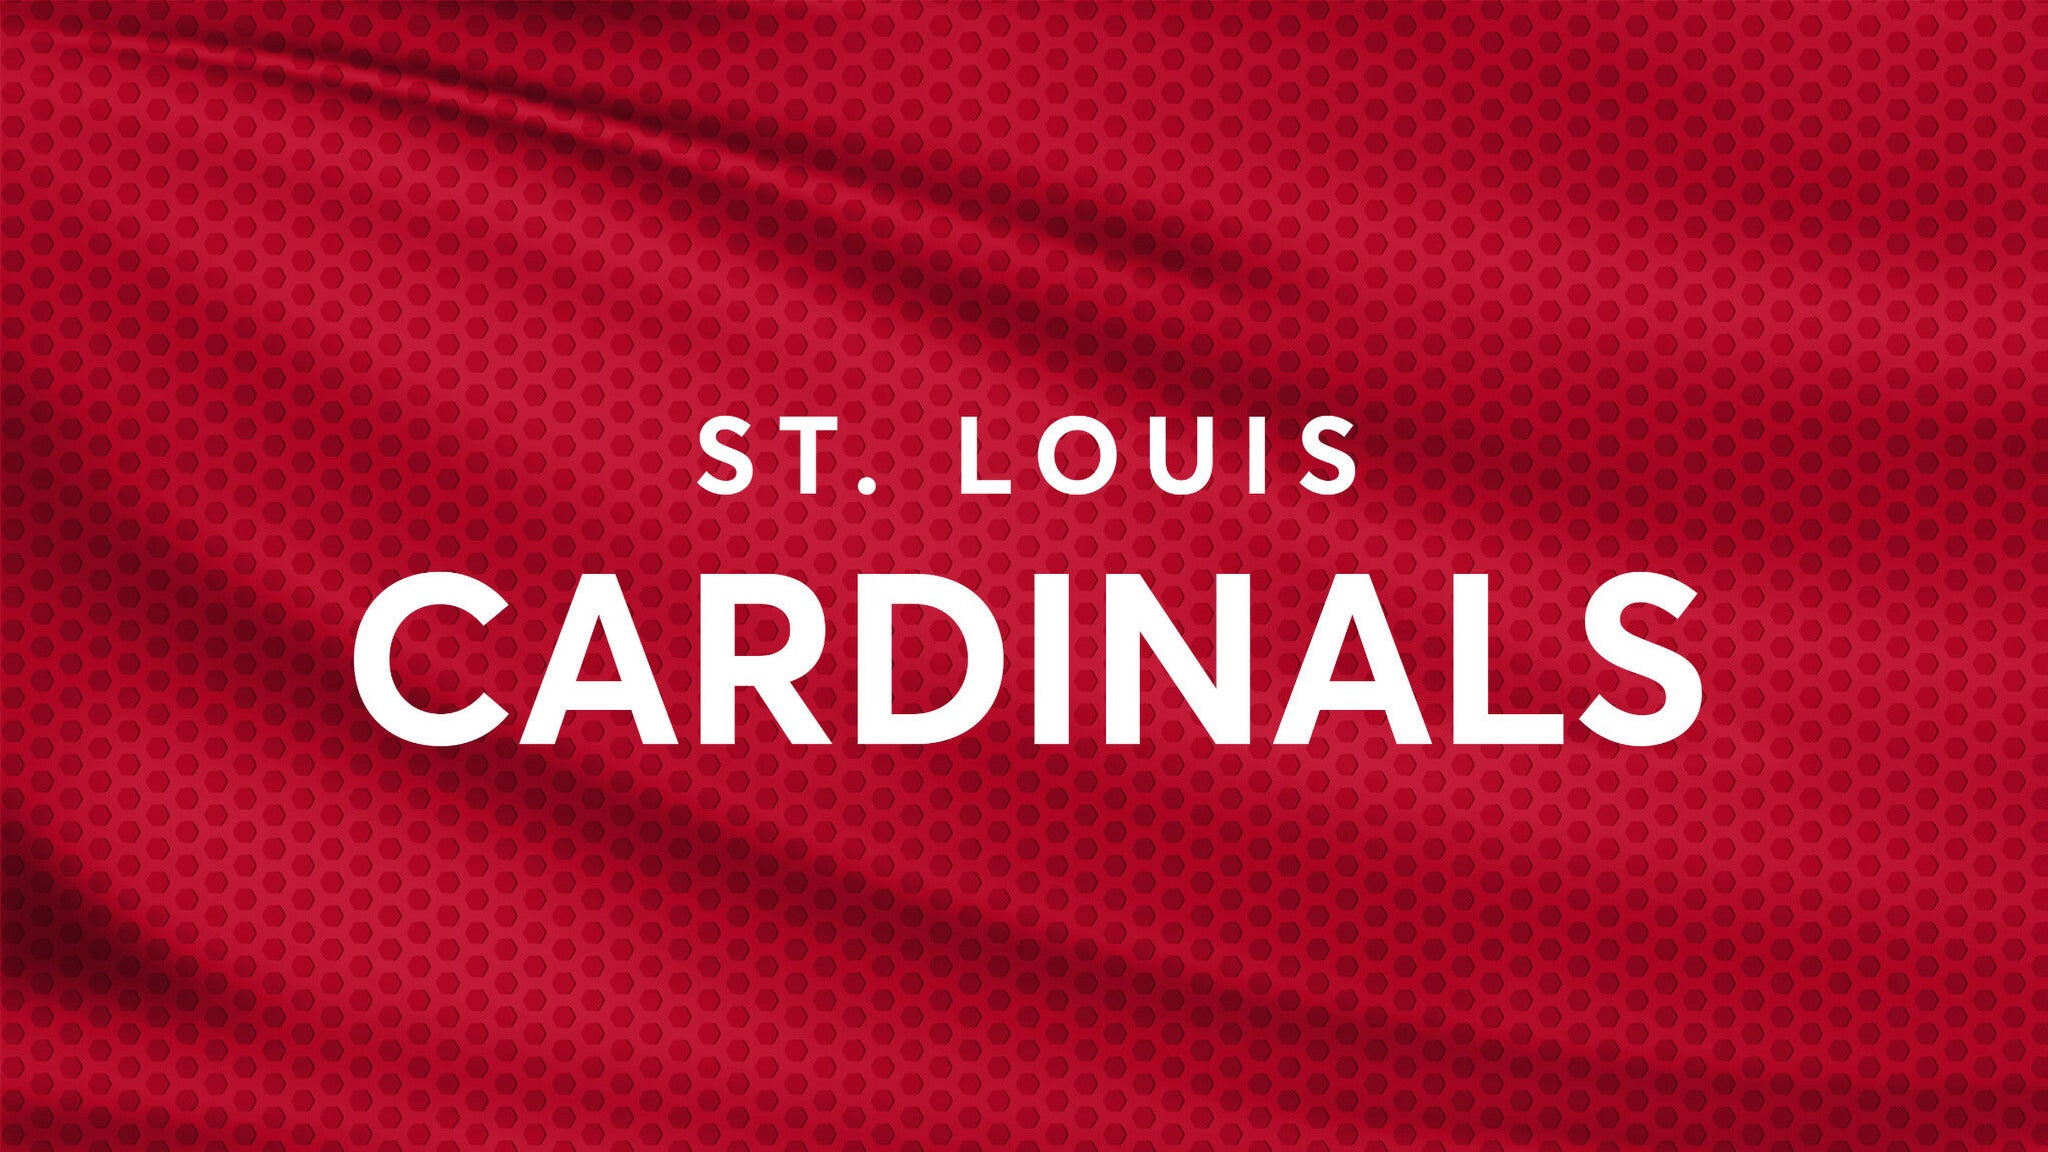 St. Louis Cardinals Spring Training - RV Parking Tickets | Event Dates & Schedule | www.bagssaleusa.com